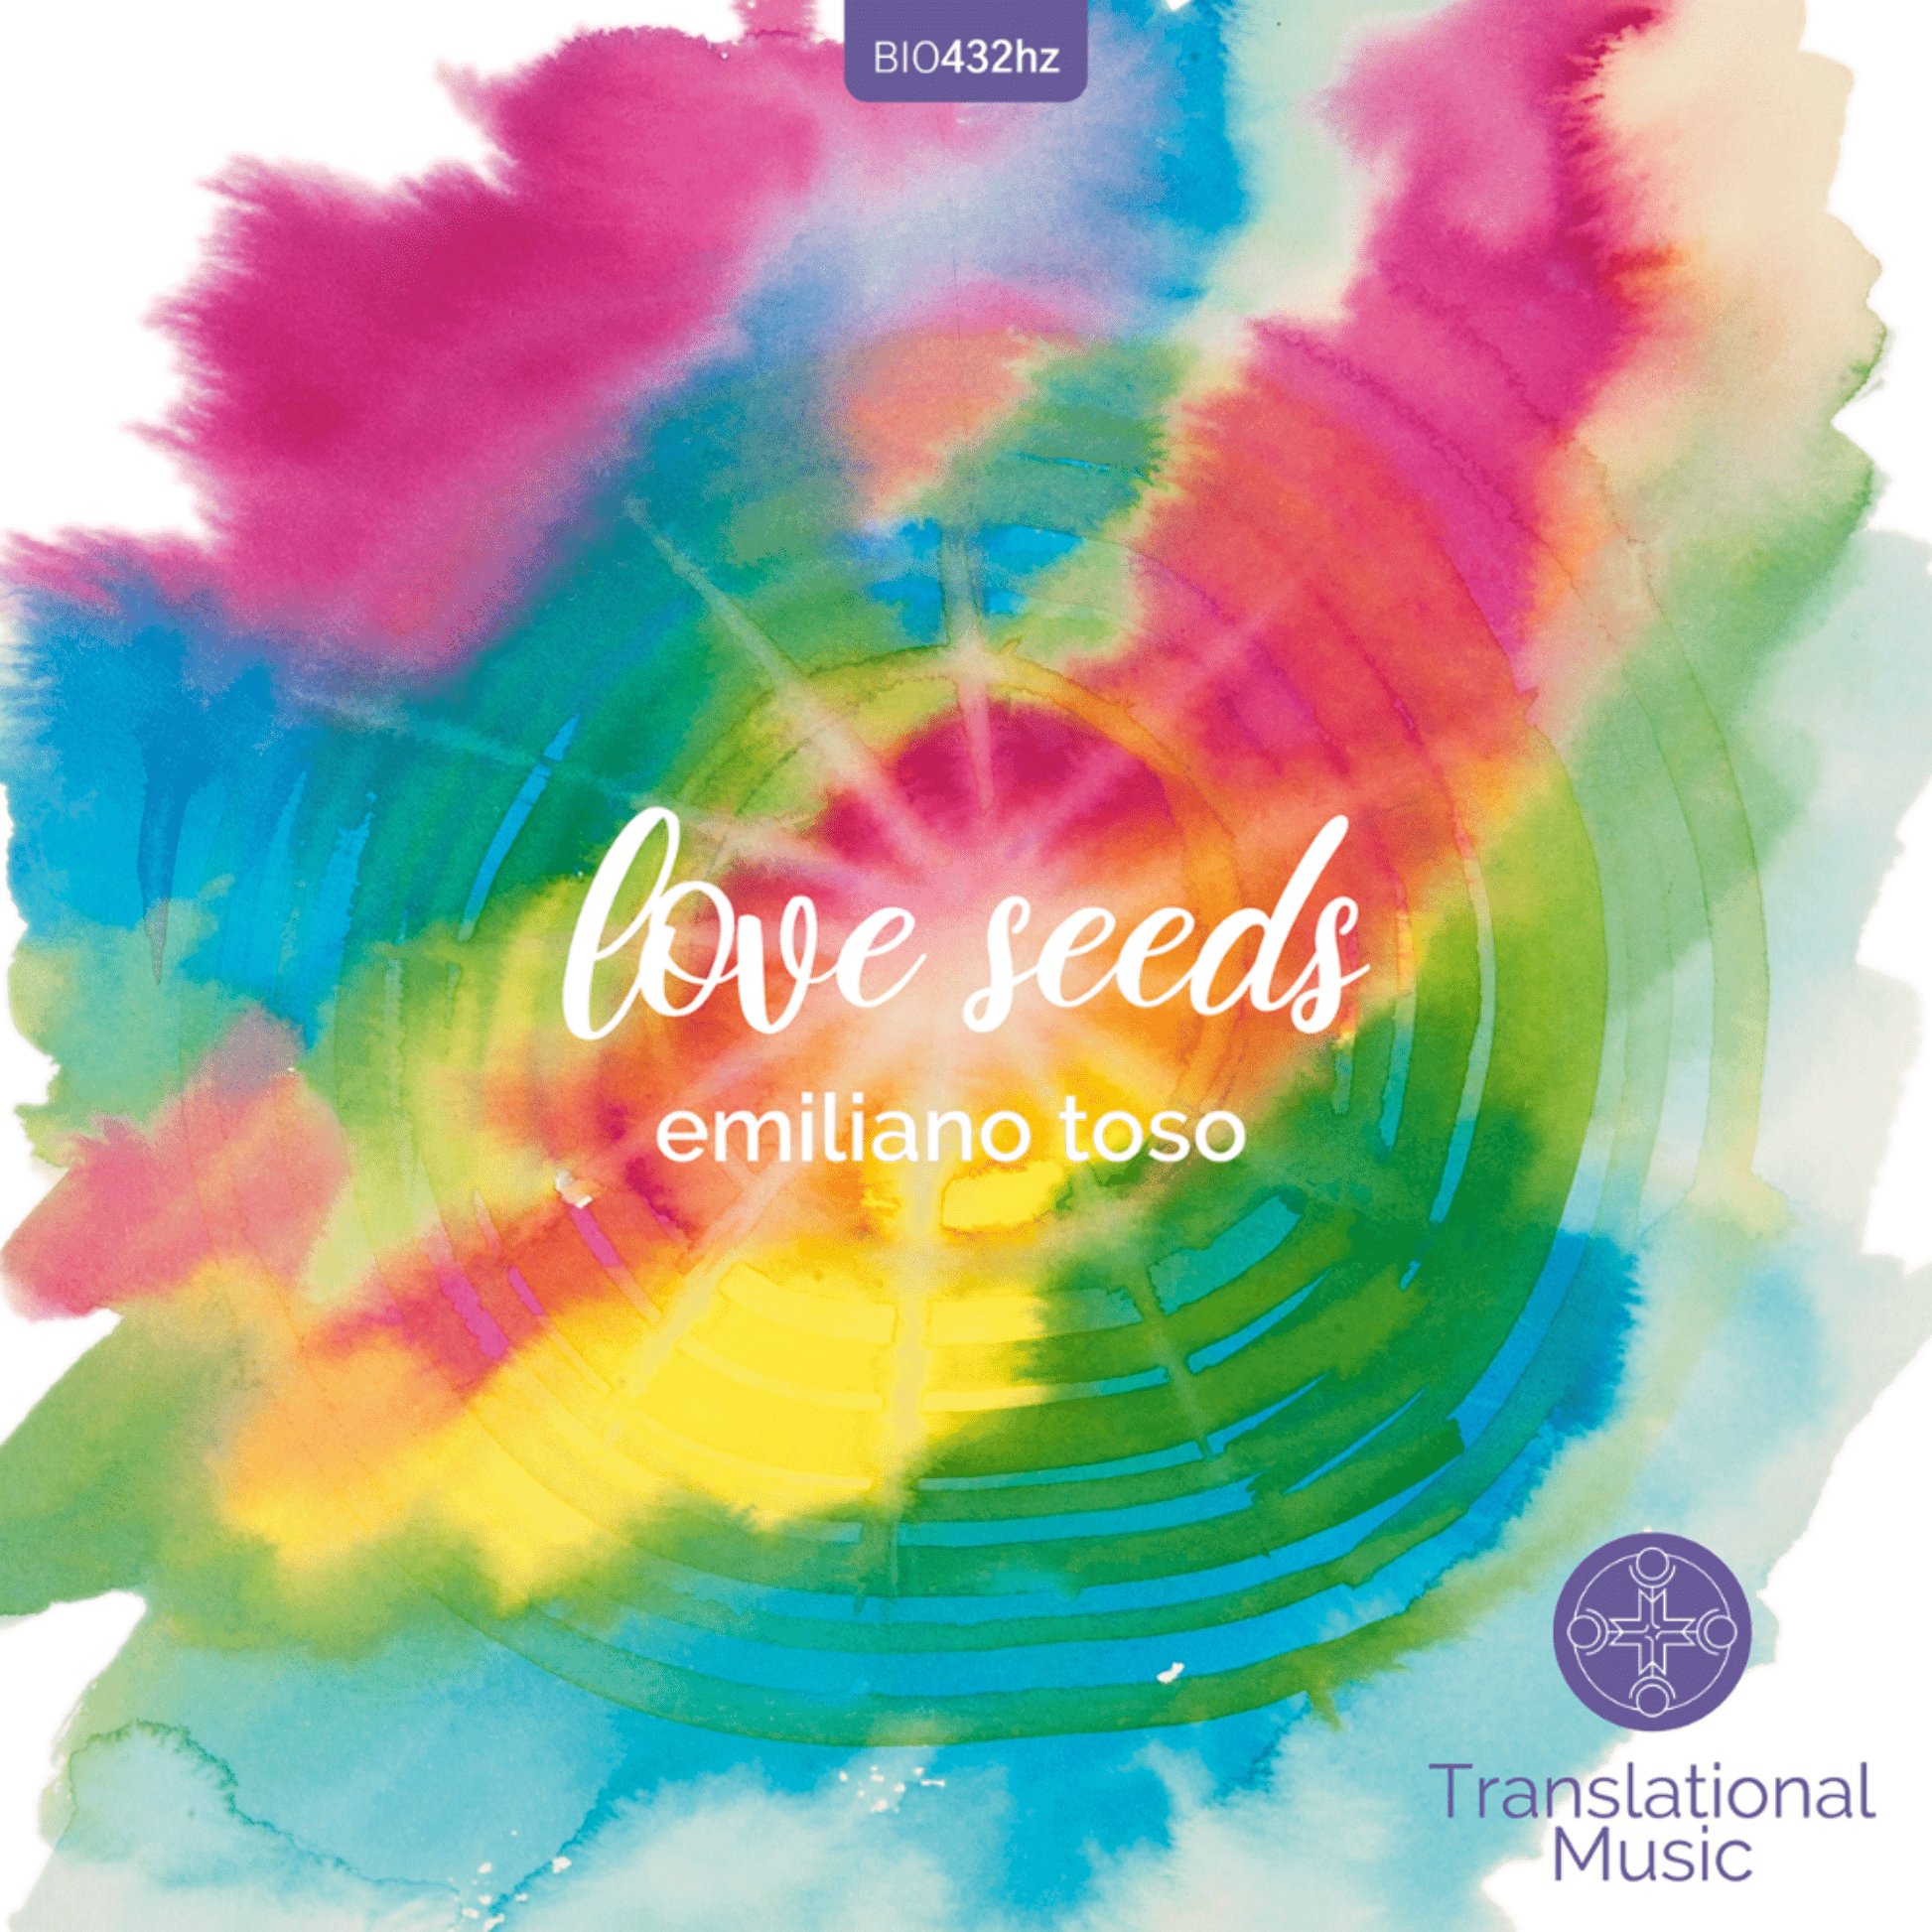 Album digitale "Love Seeds"